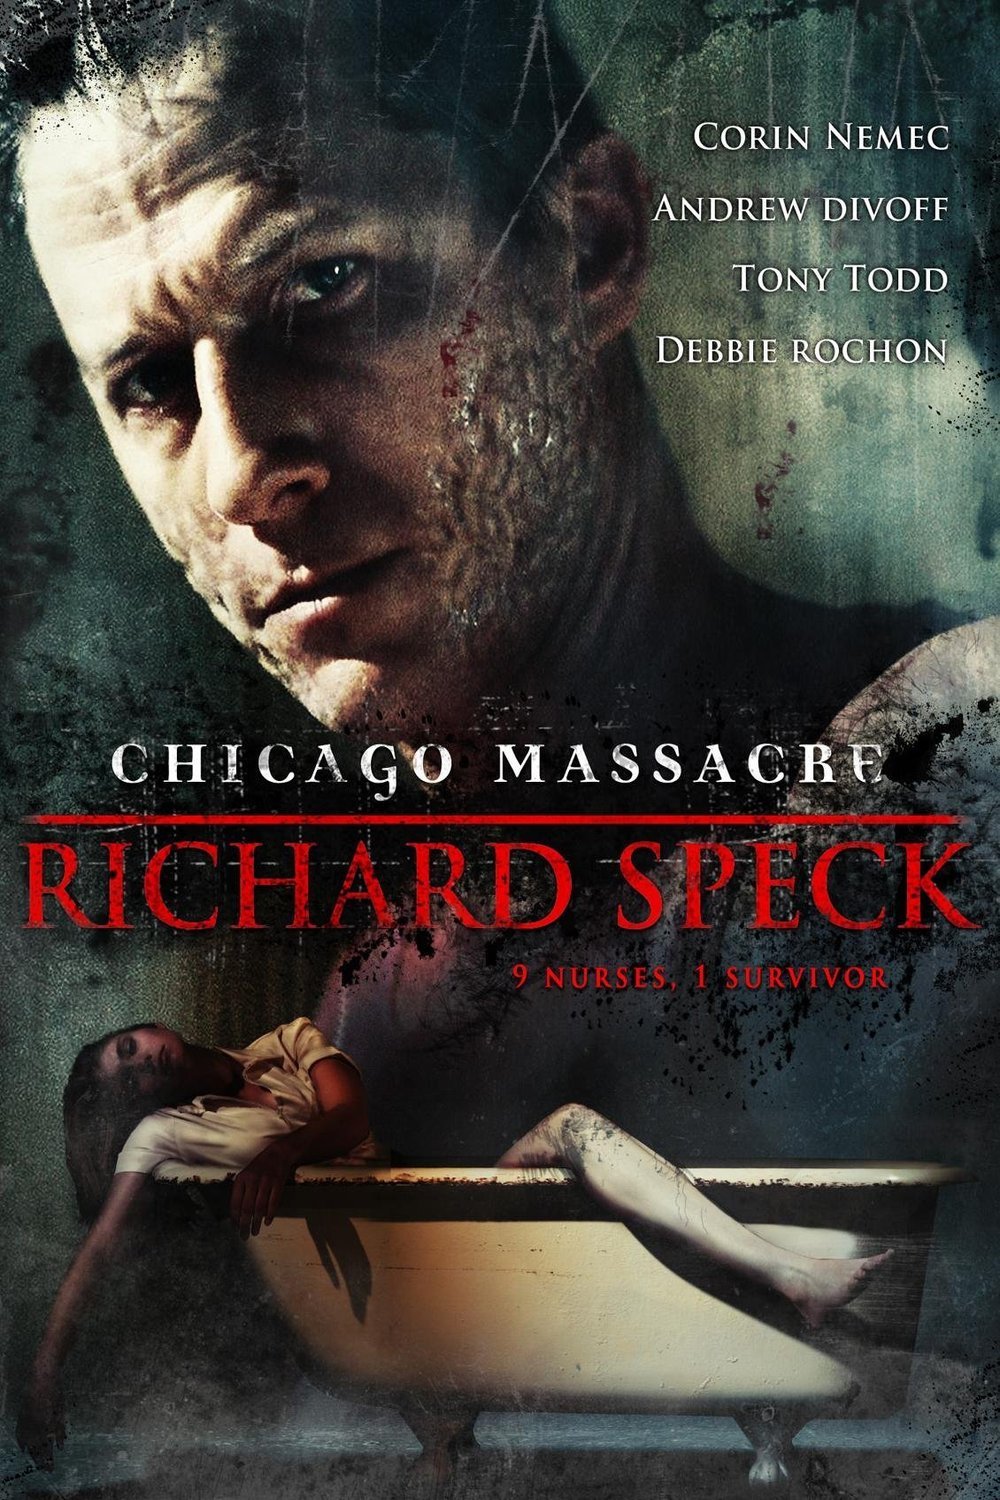 Poster of the movie Chicago Massacre: Richard Speck